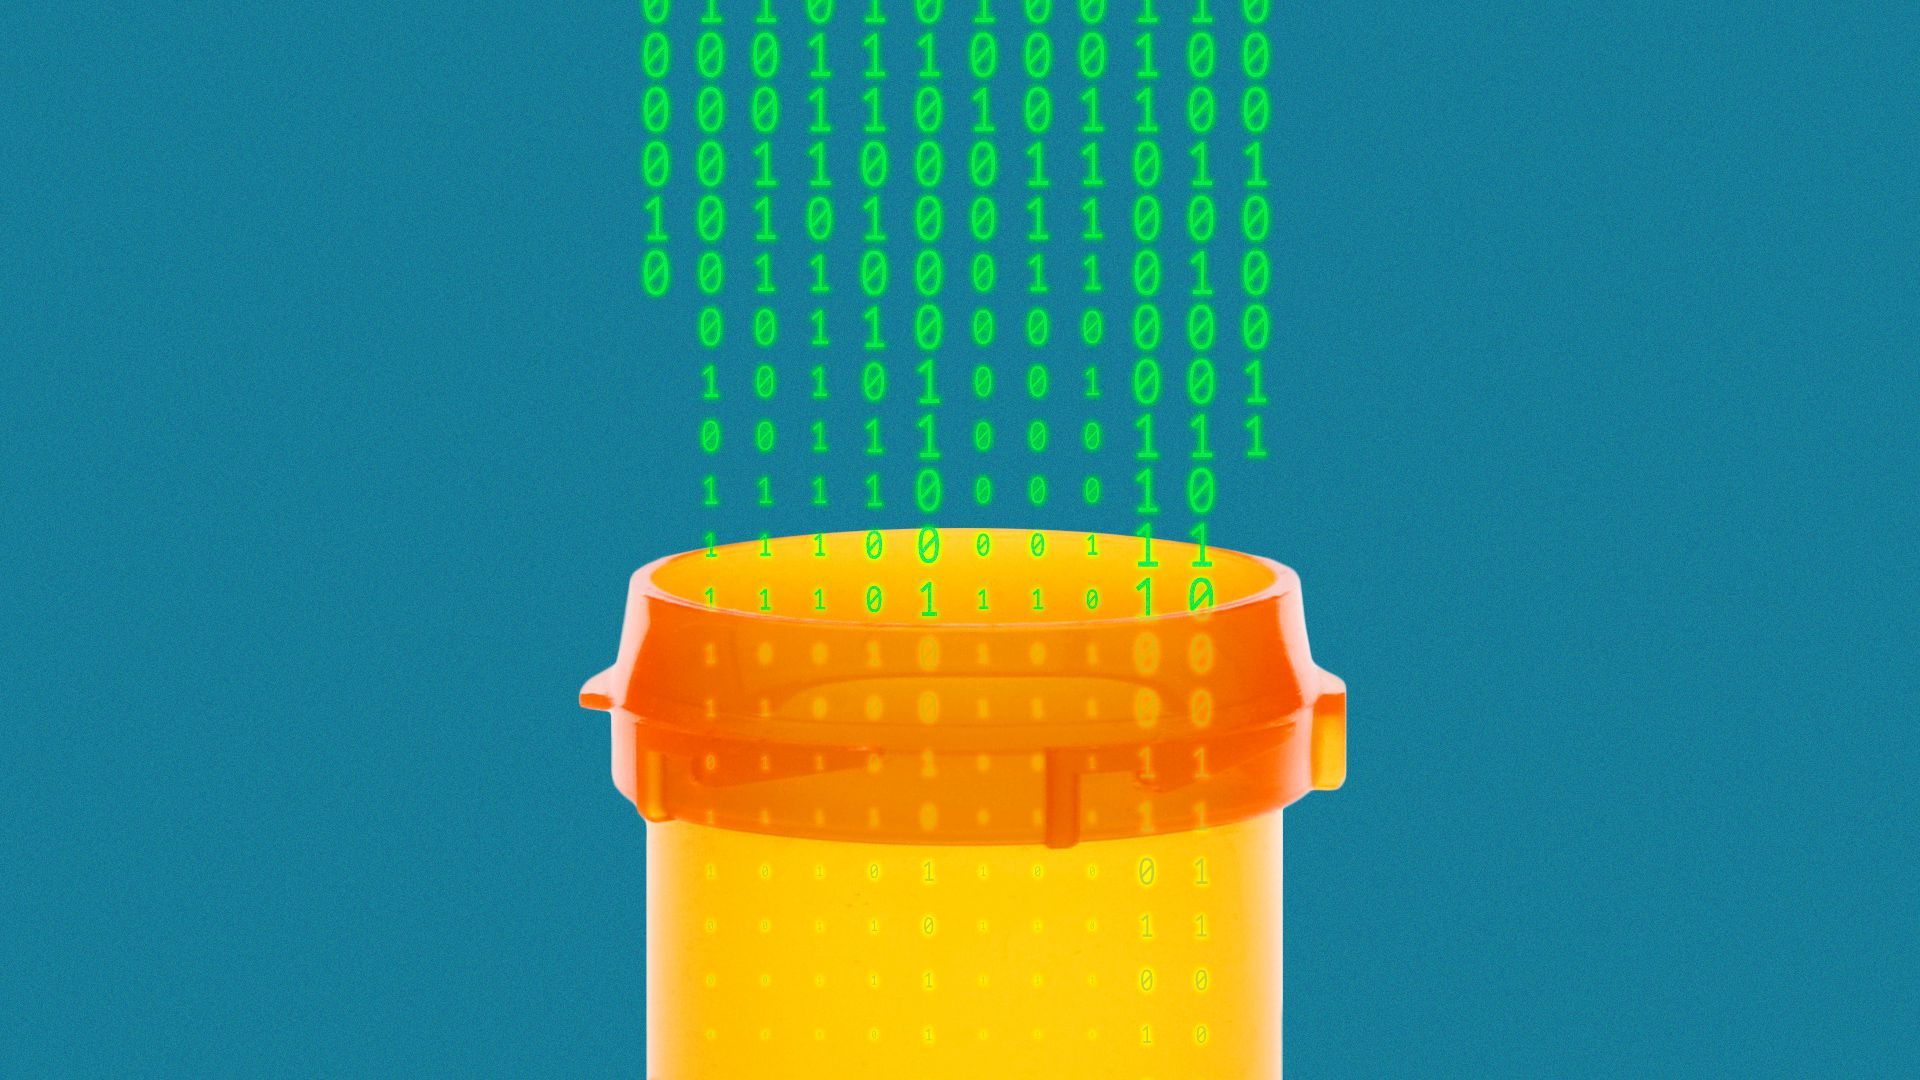 Illustration of binary code falling into a prescription pill bottle.